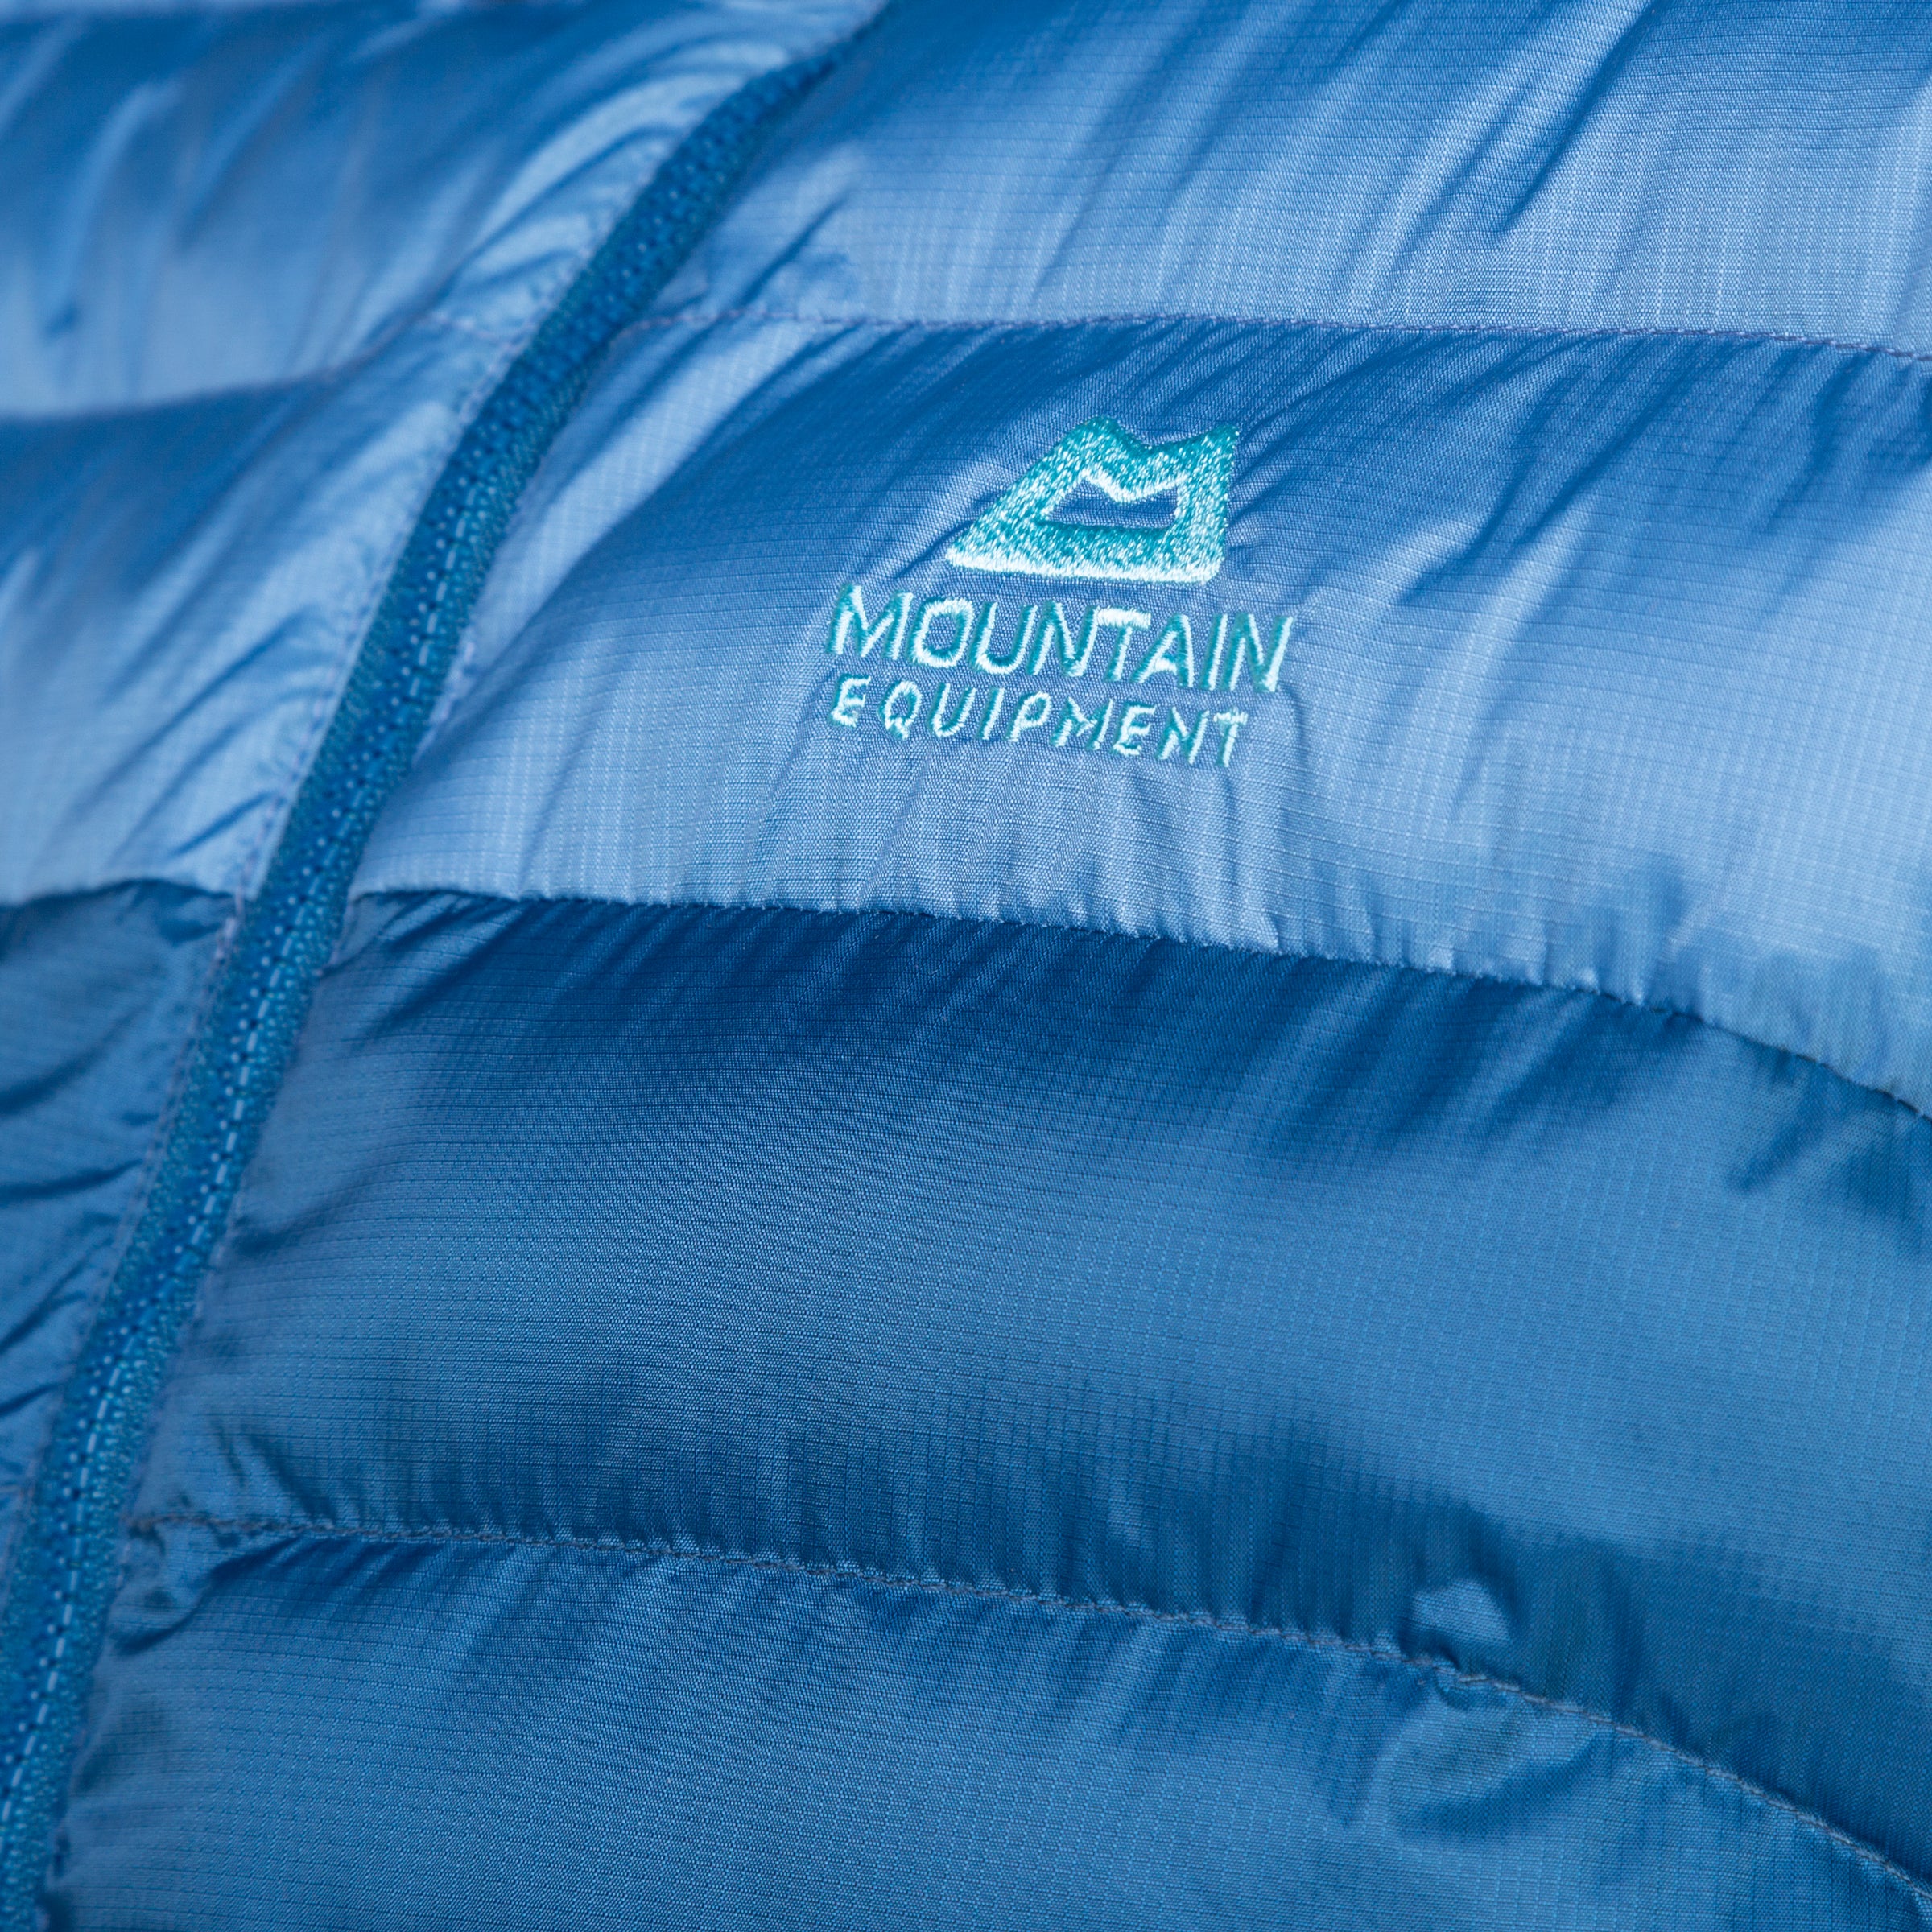 Mountain Equipment Womens Superflux Jacket - Raisin-Mulberry